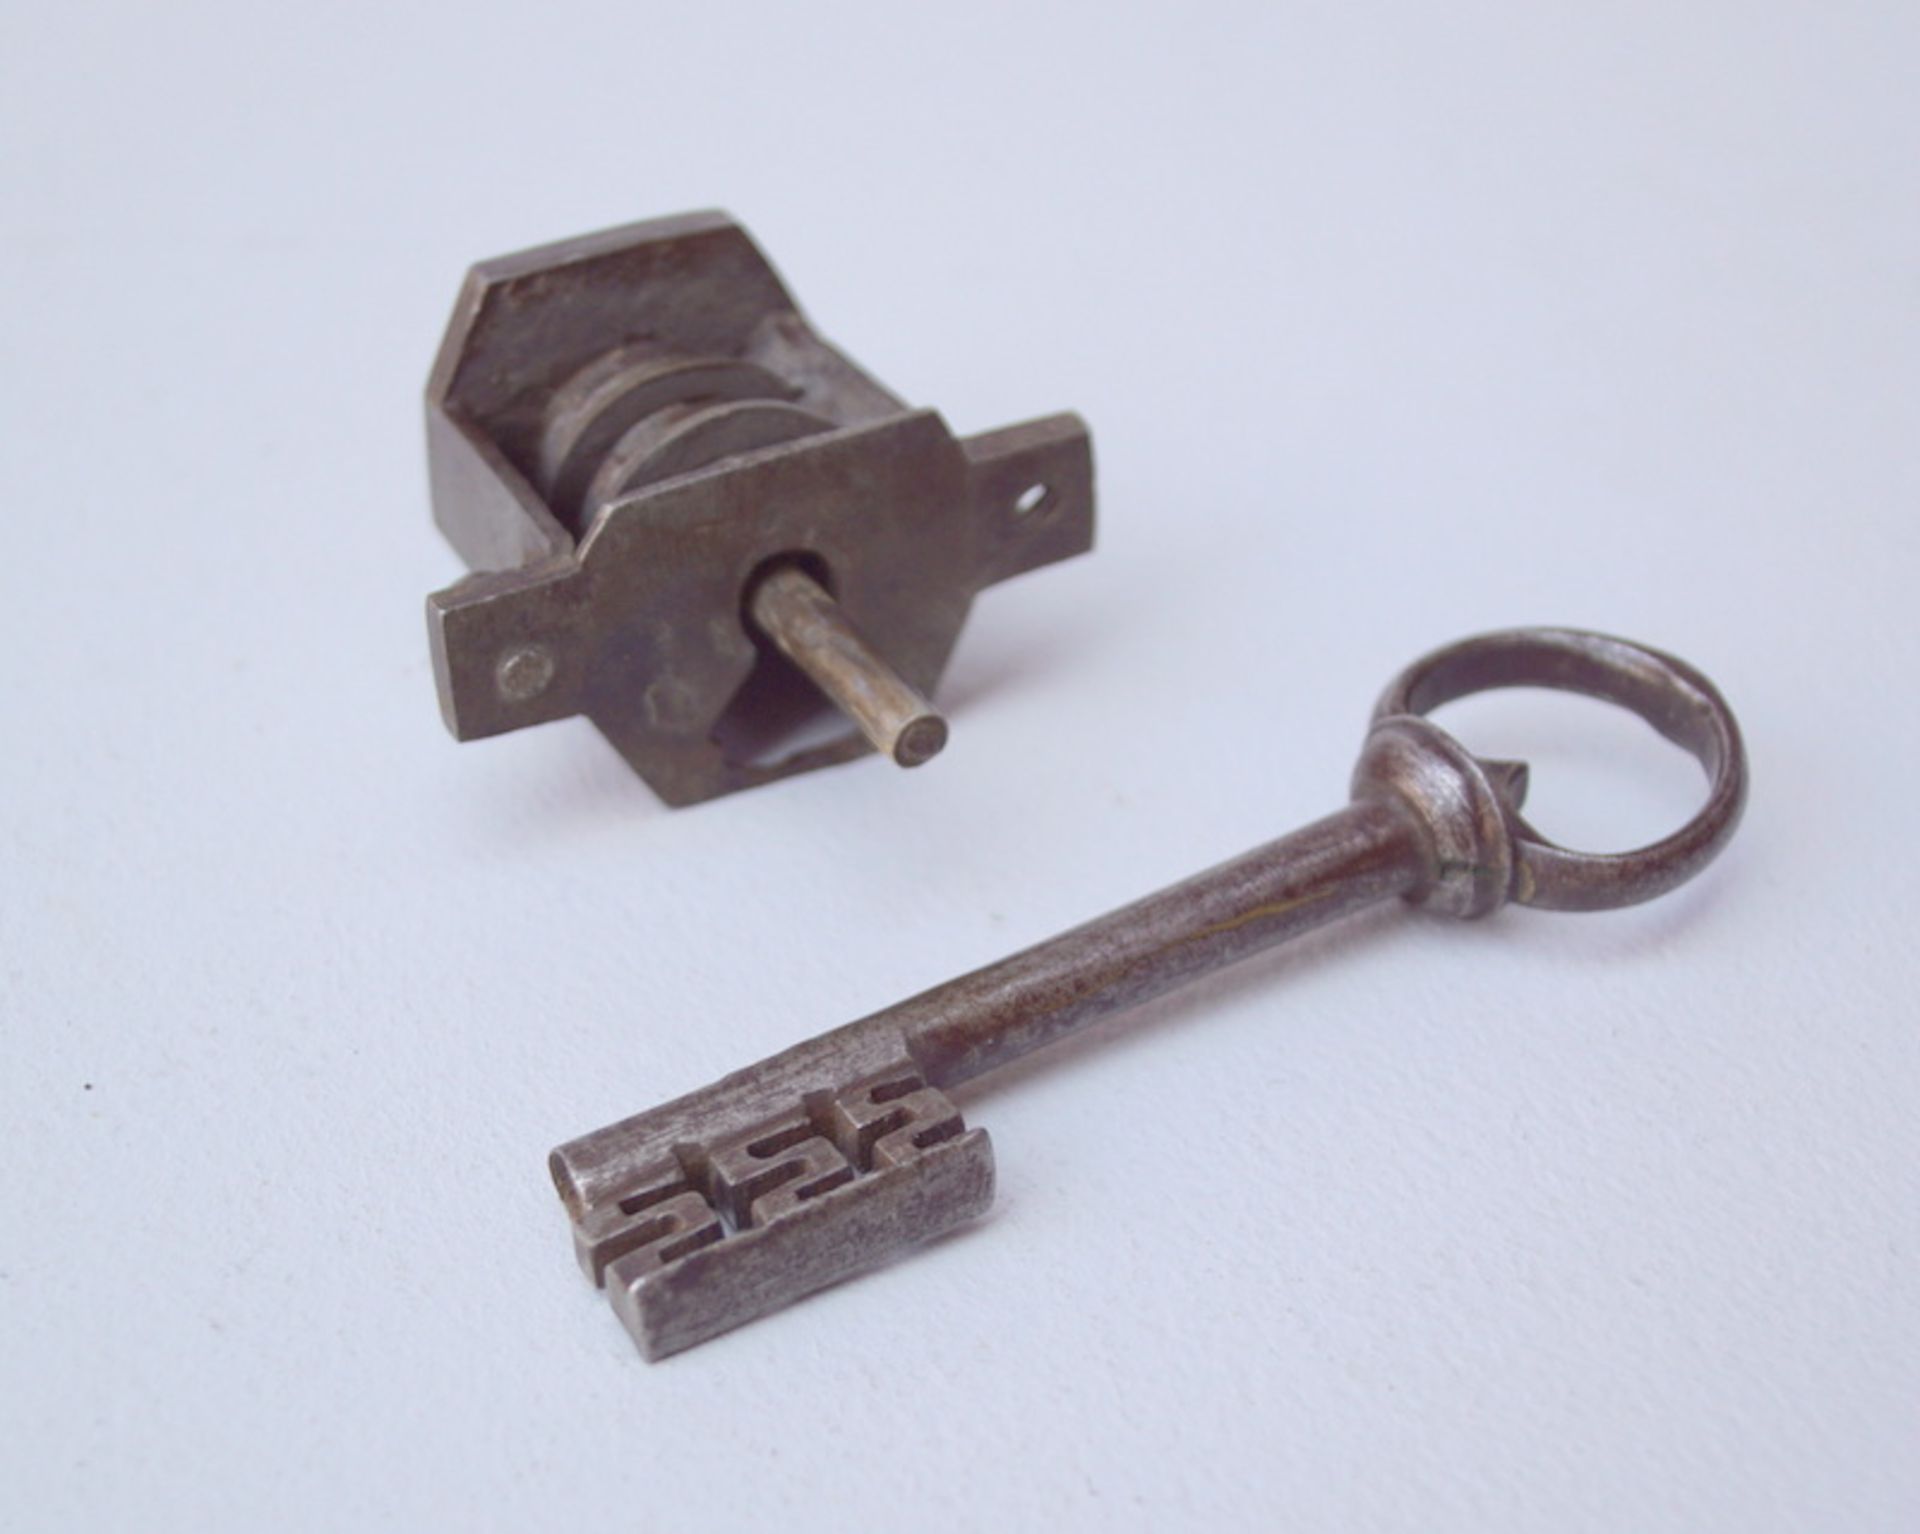 Renaissanceschloss für TruhenEisendom, geschmiedet mit originalem 3 bortigem Schlüssel, Gravur mit